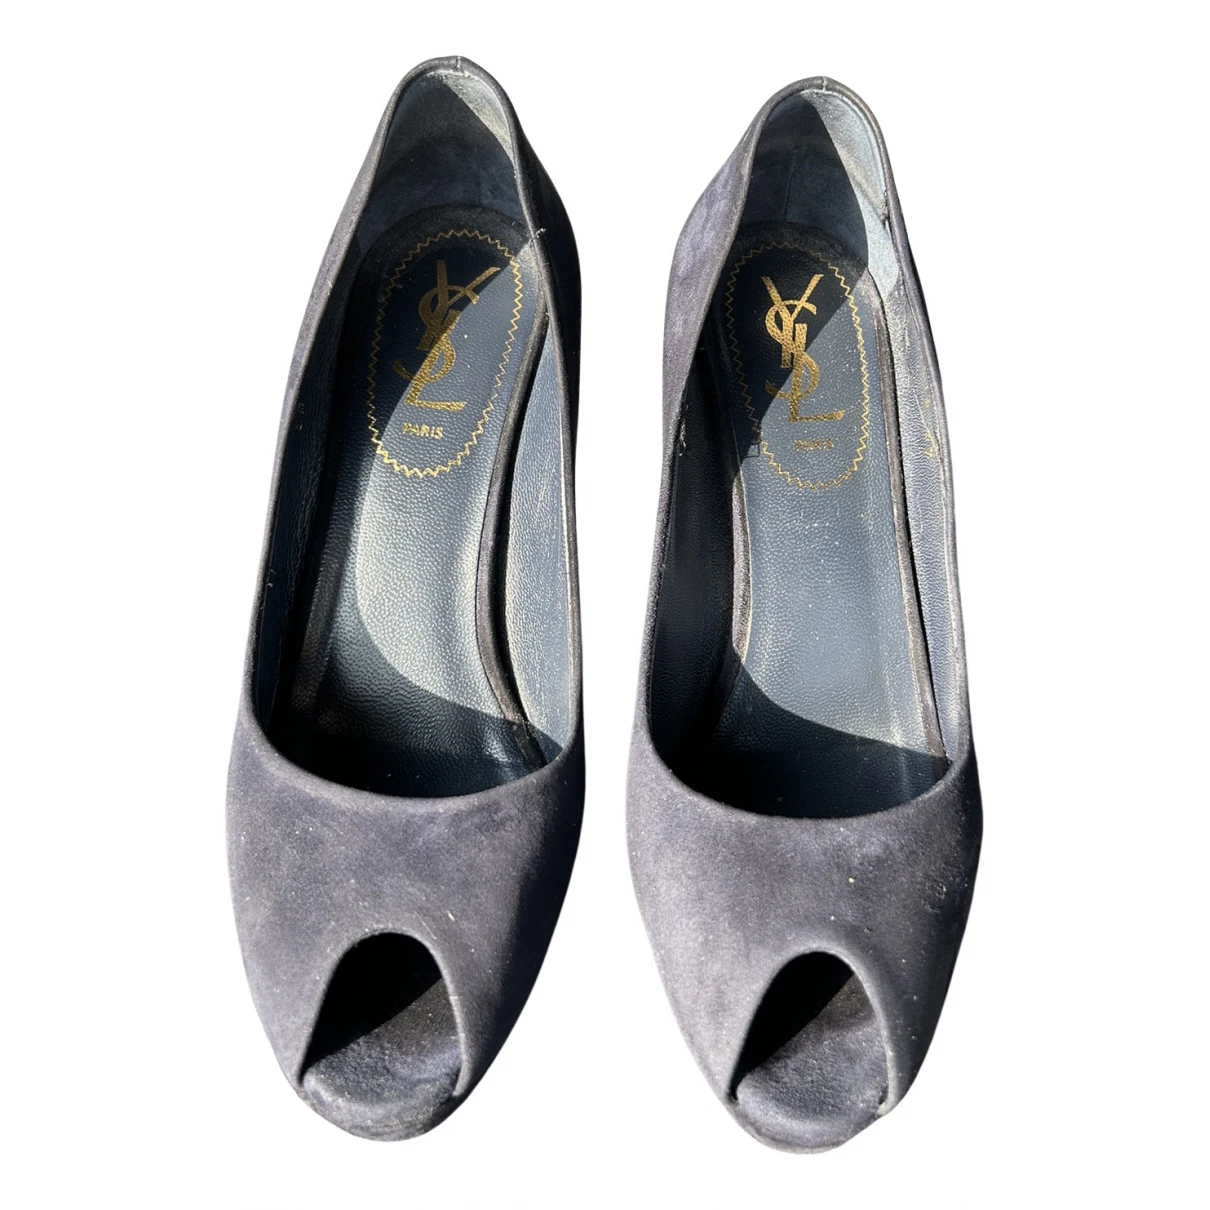 shoes Saint Laurent sandals for Female Suede 37 EU. Used condition